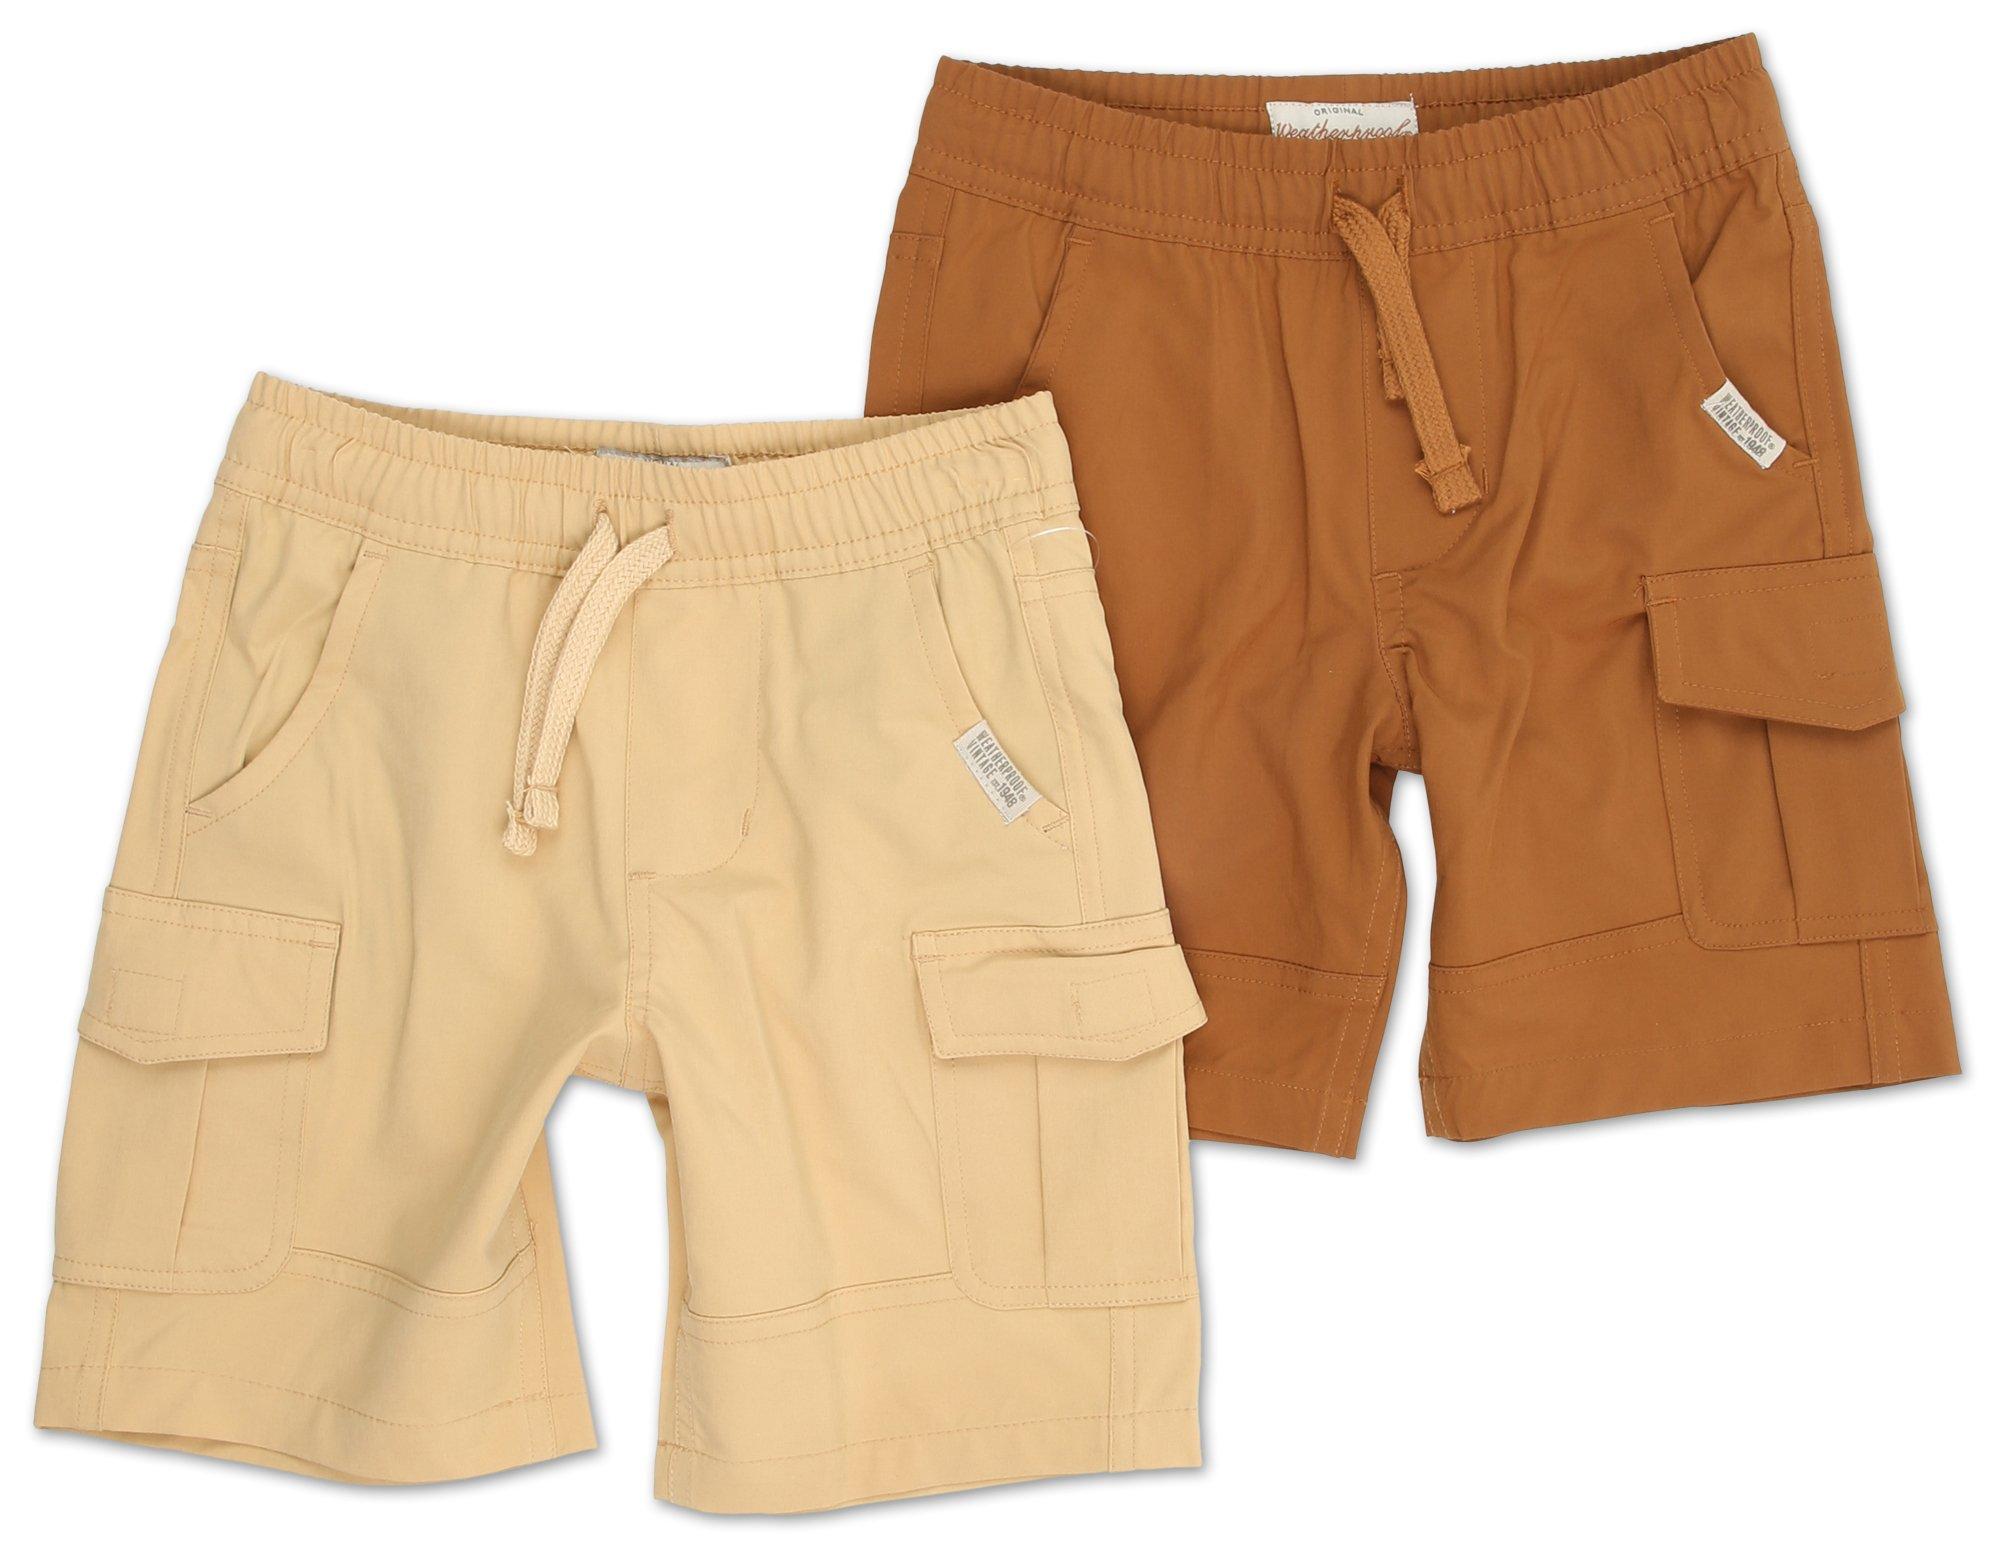 Little Boys 2 Pk Cargo Shorts